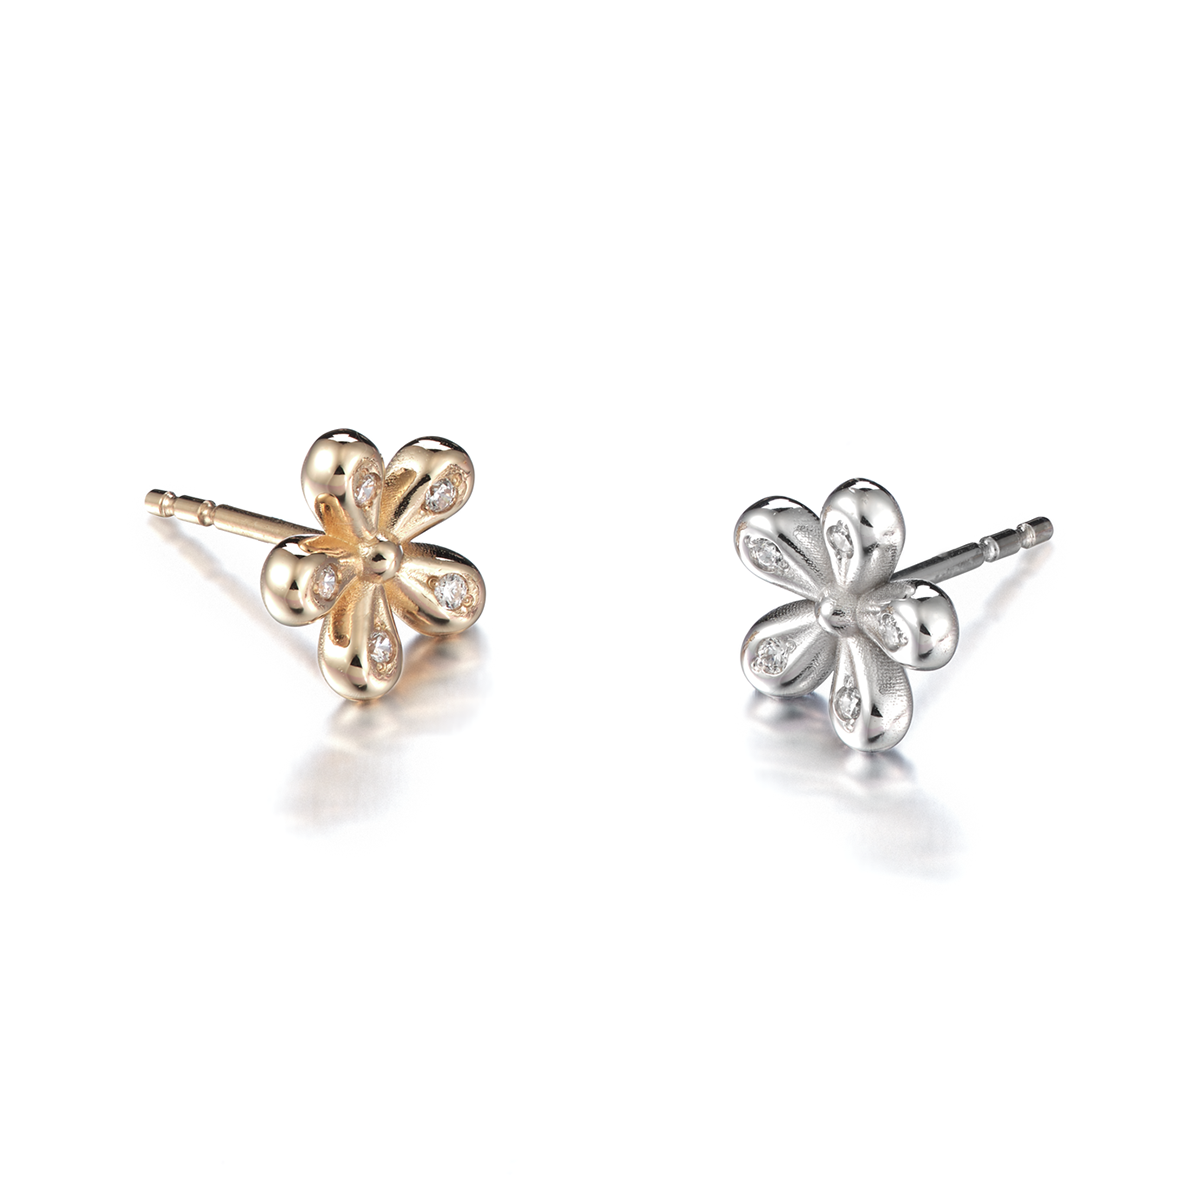 Juuret - Roots: Golden flowers - diamond earrings